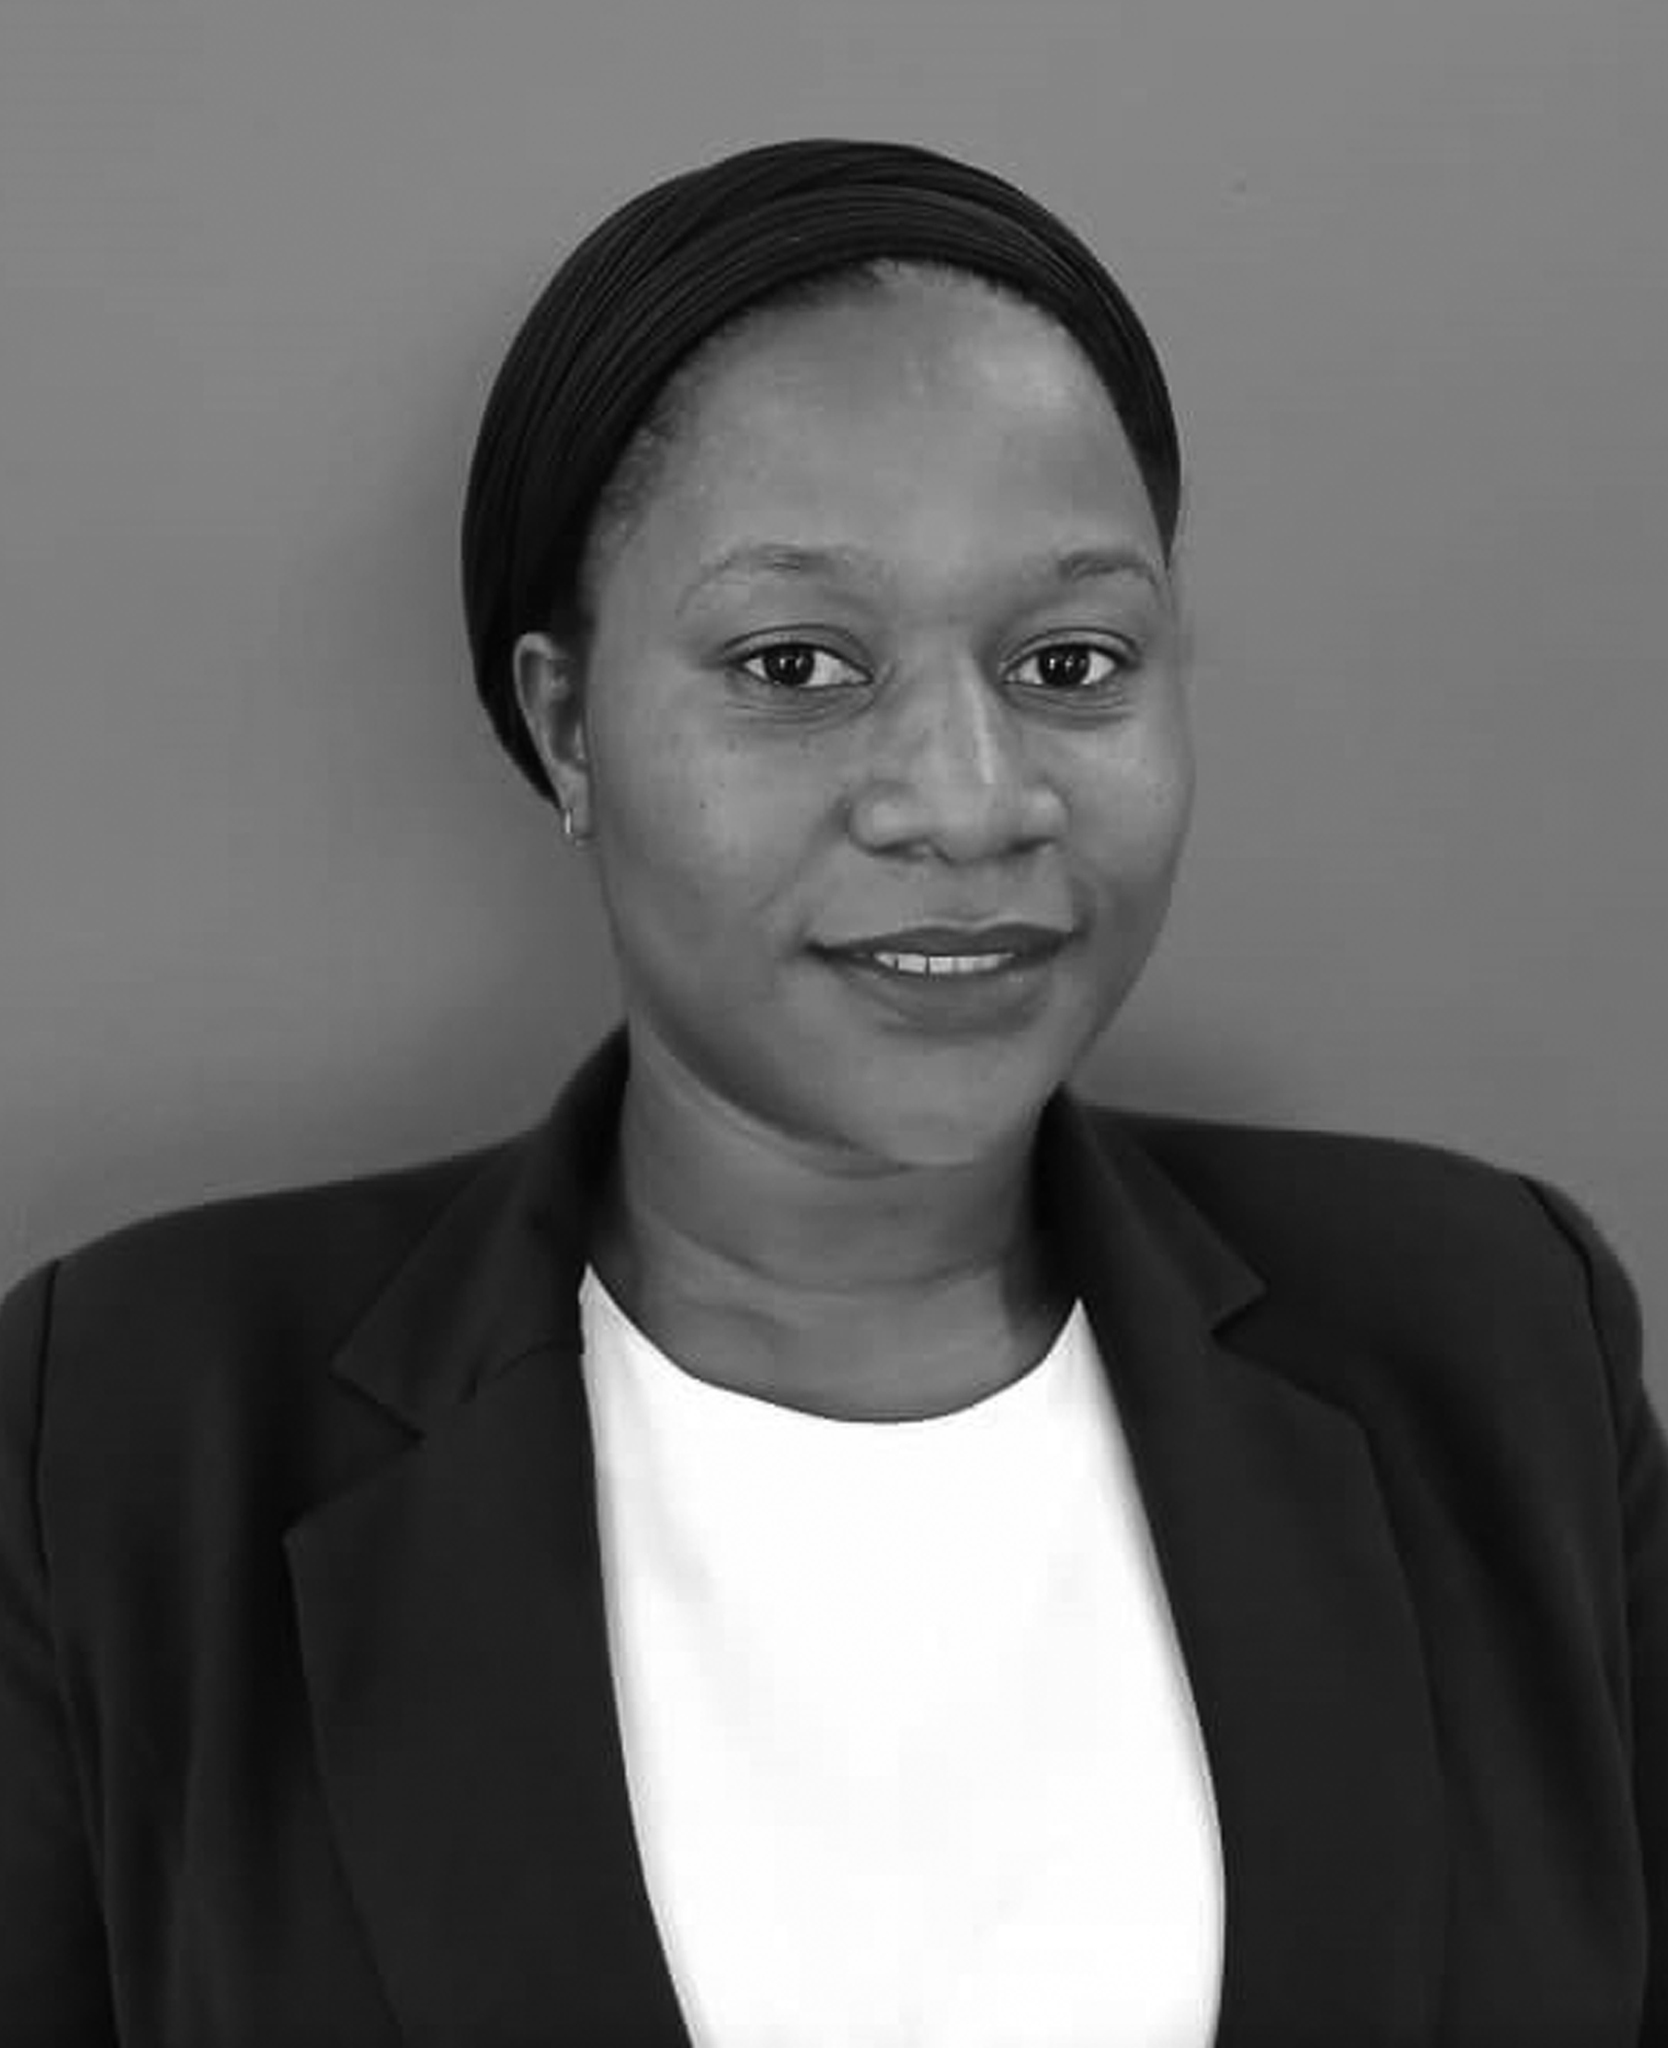 https://finandlaw.co.tz/wp-content/uploads/2020/09/Beatrice-Mutembei.jpg